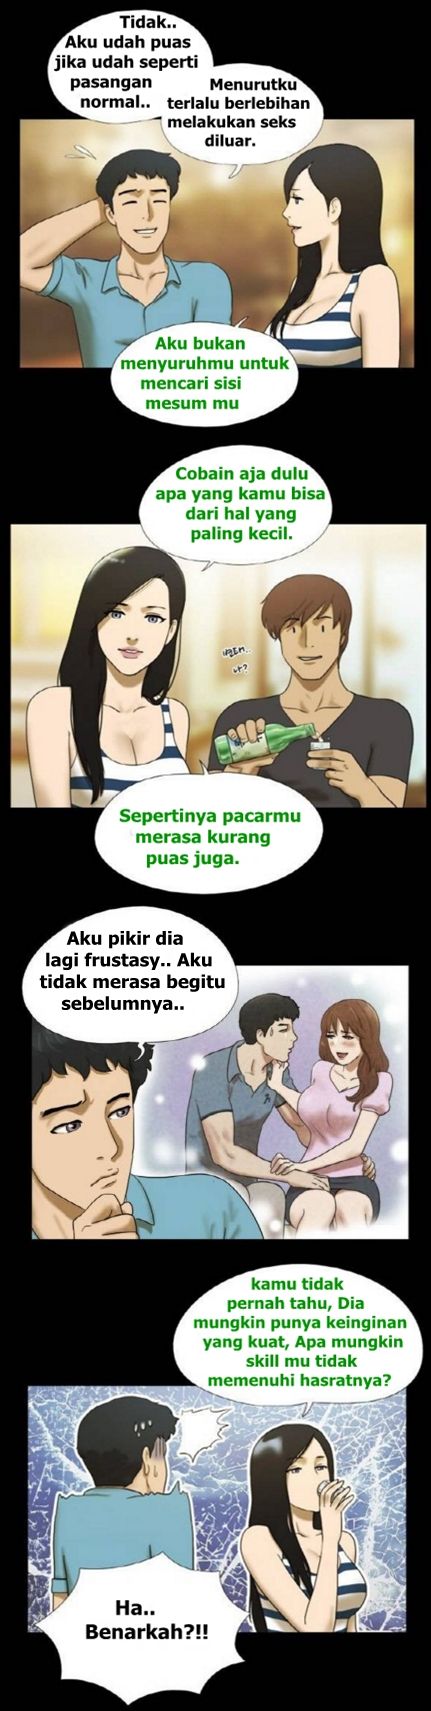 17 couple game sexual fantasy (Bahasa Indonesia) on going 성판17:커플게임